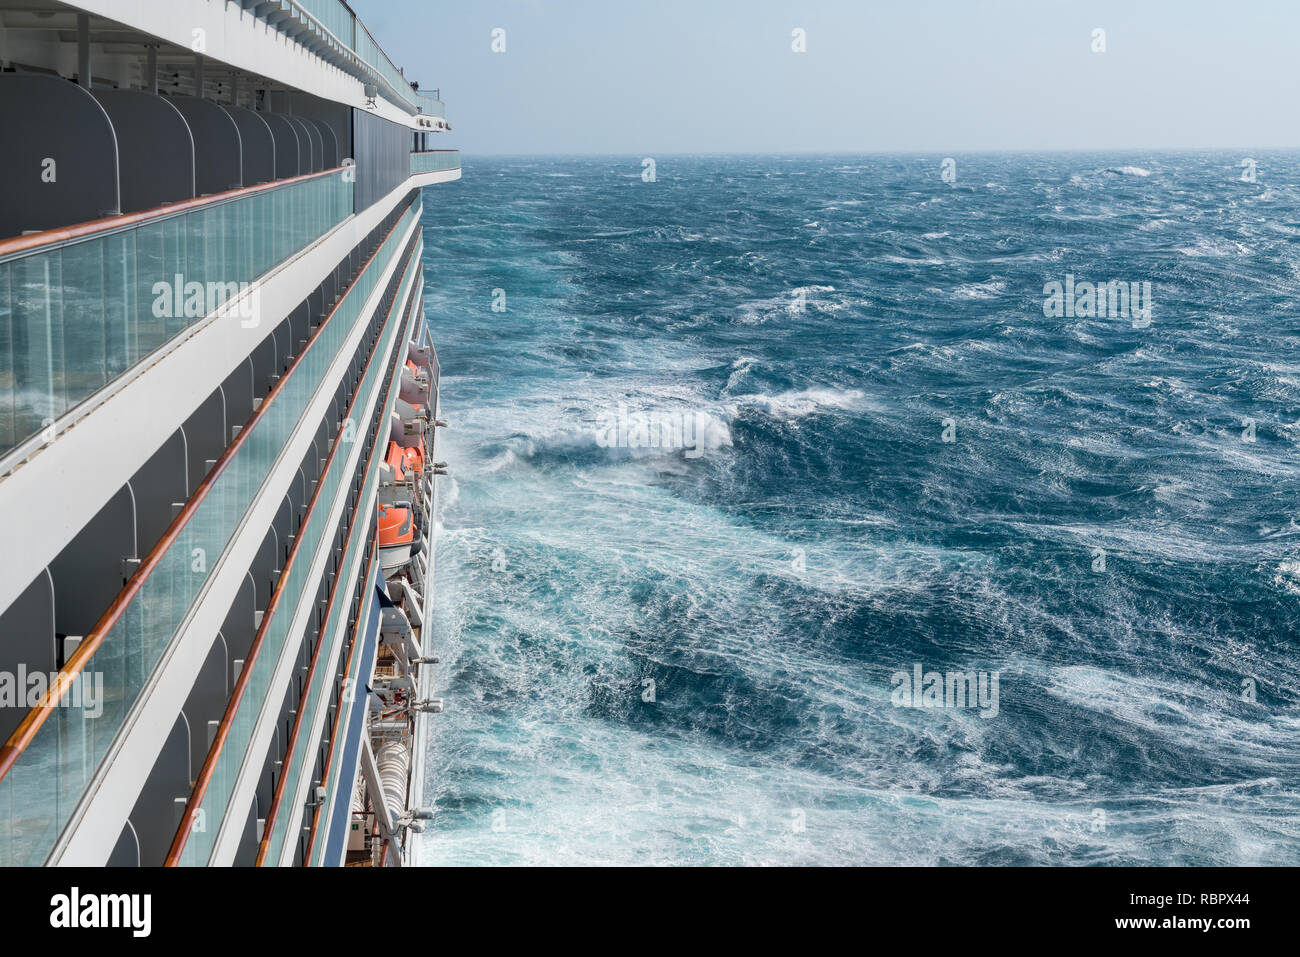 Modern cruise ship traveling through rough seas Stock Photo